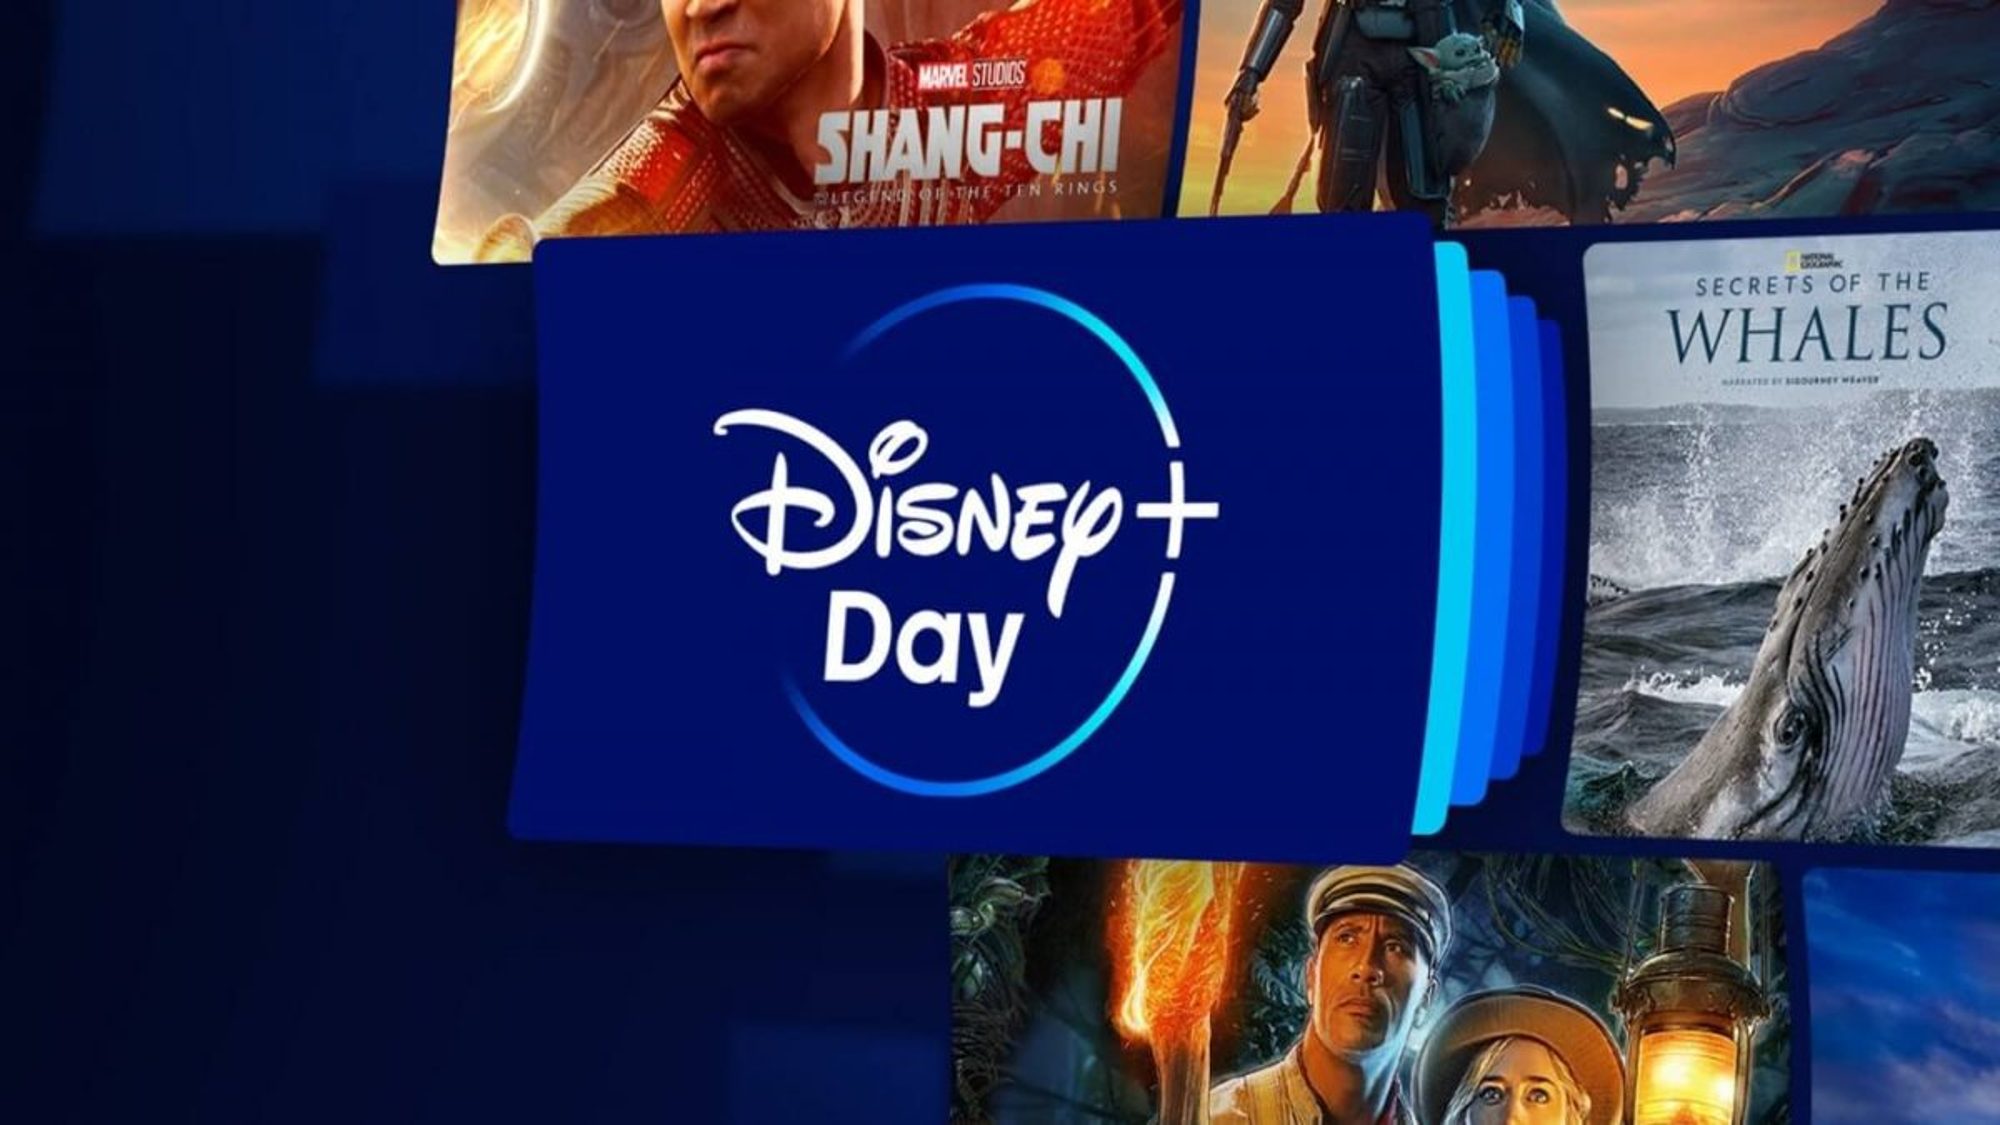 Zootopia+” Disney+ Original Trailer Released – What's On Disney Plus